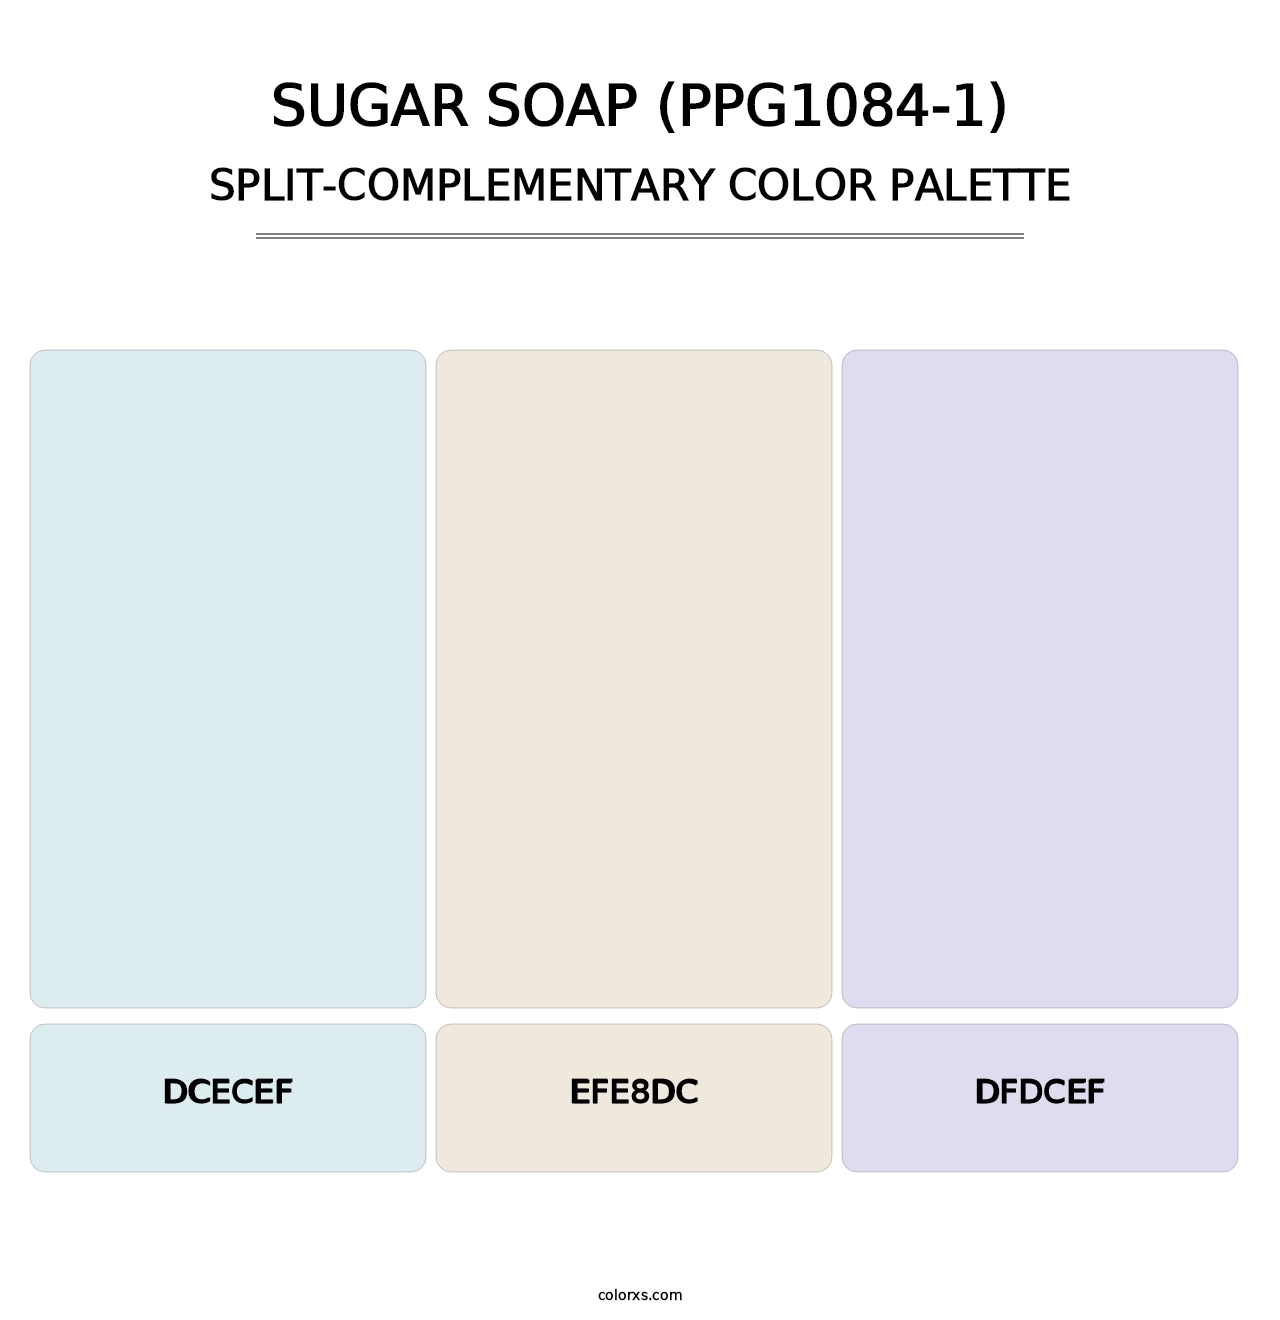 Sugar Soap (PPG1084-1) - Split-Complementary Color Palette